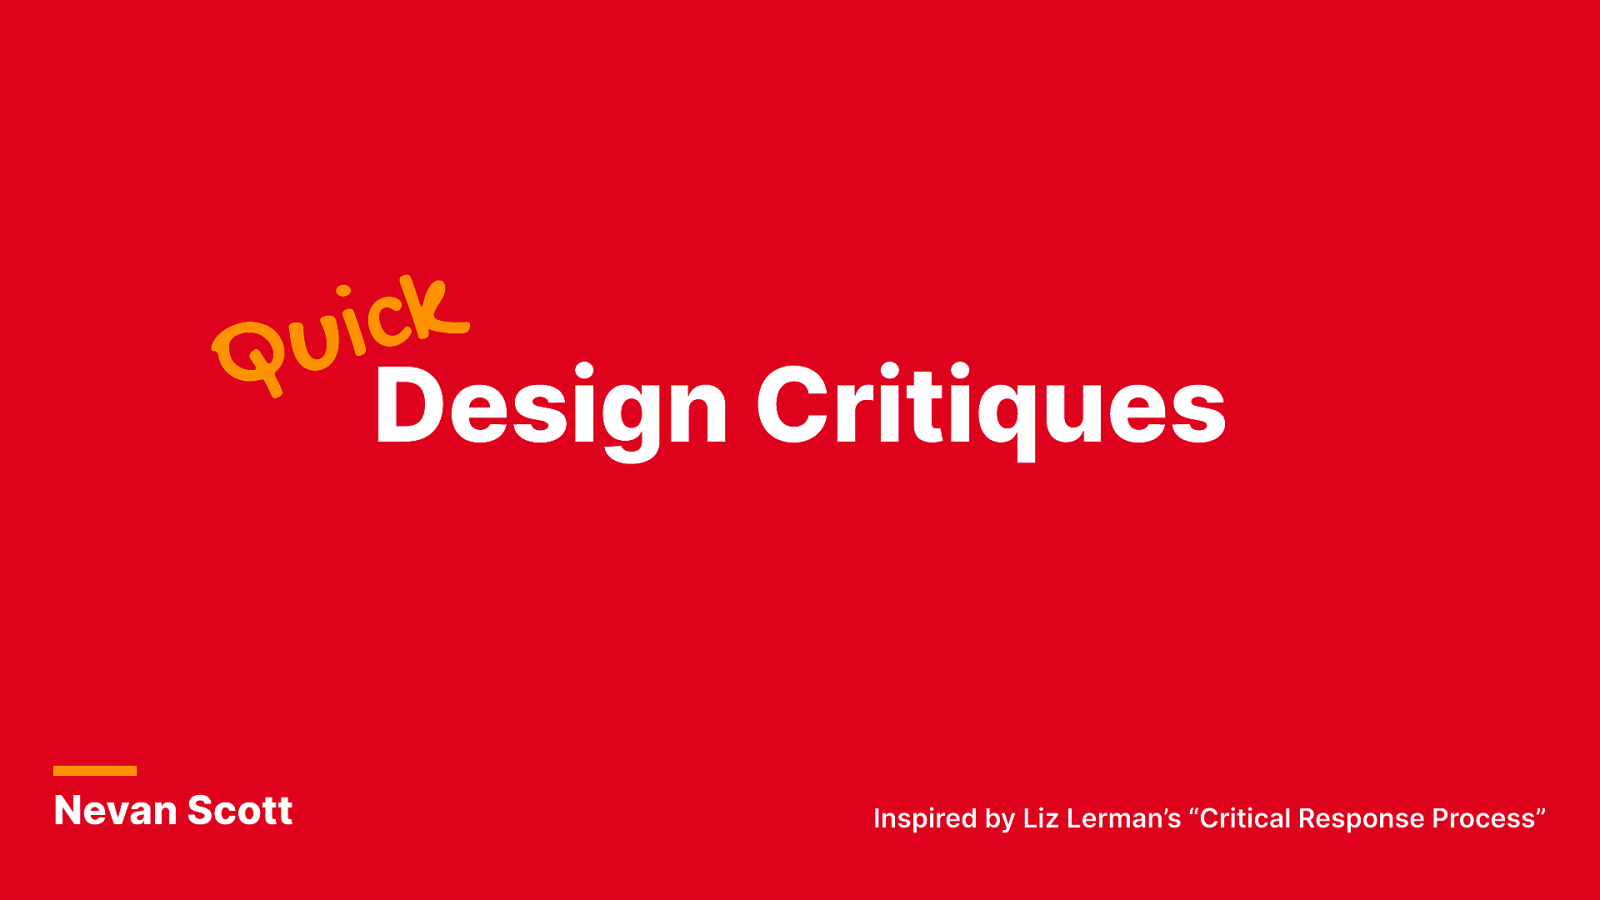 Quick Design Critiques